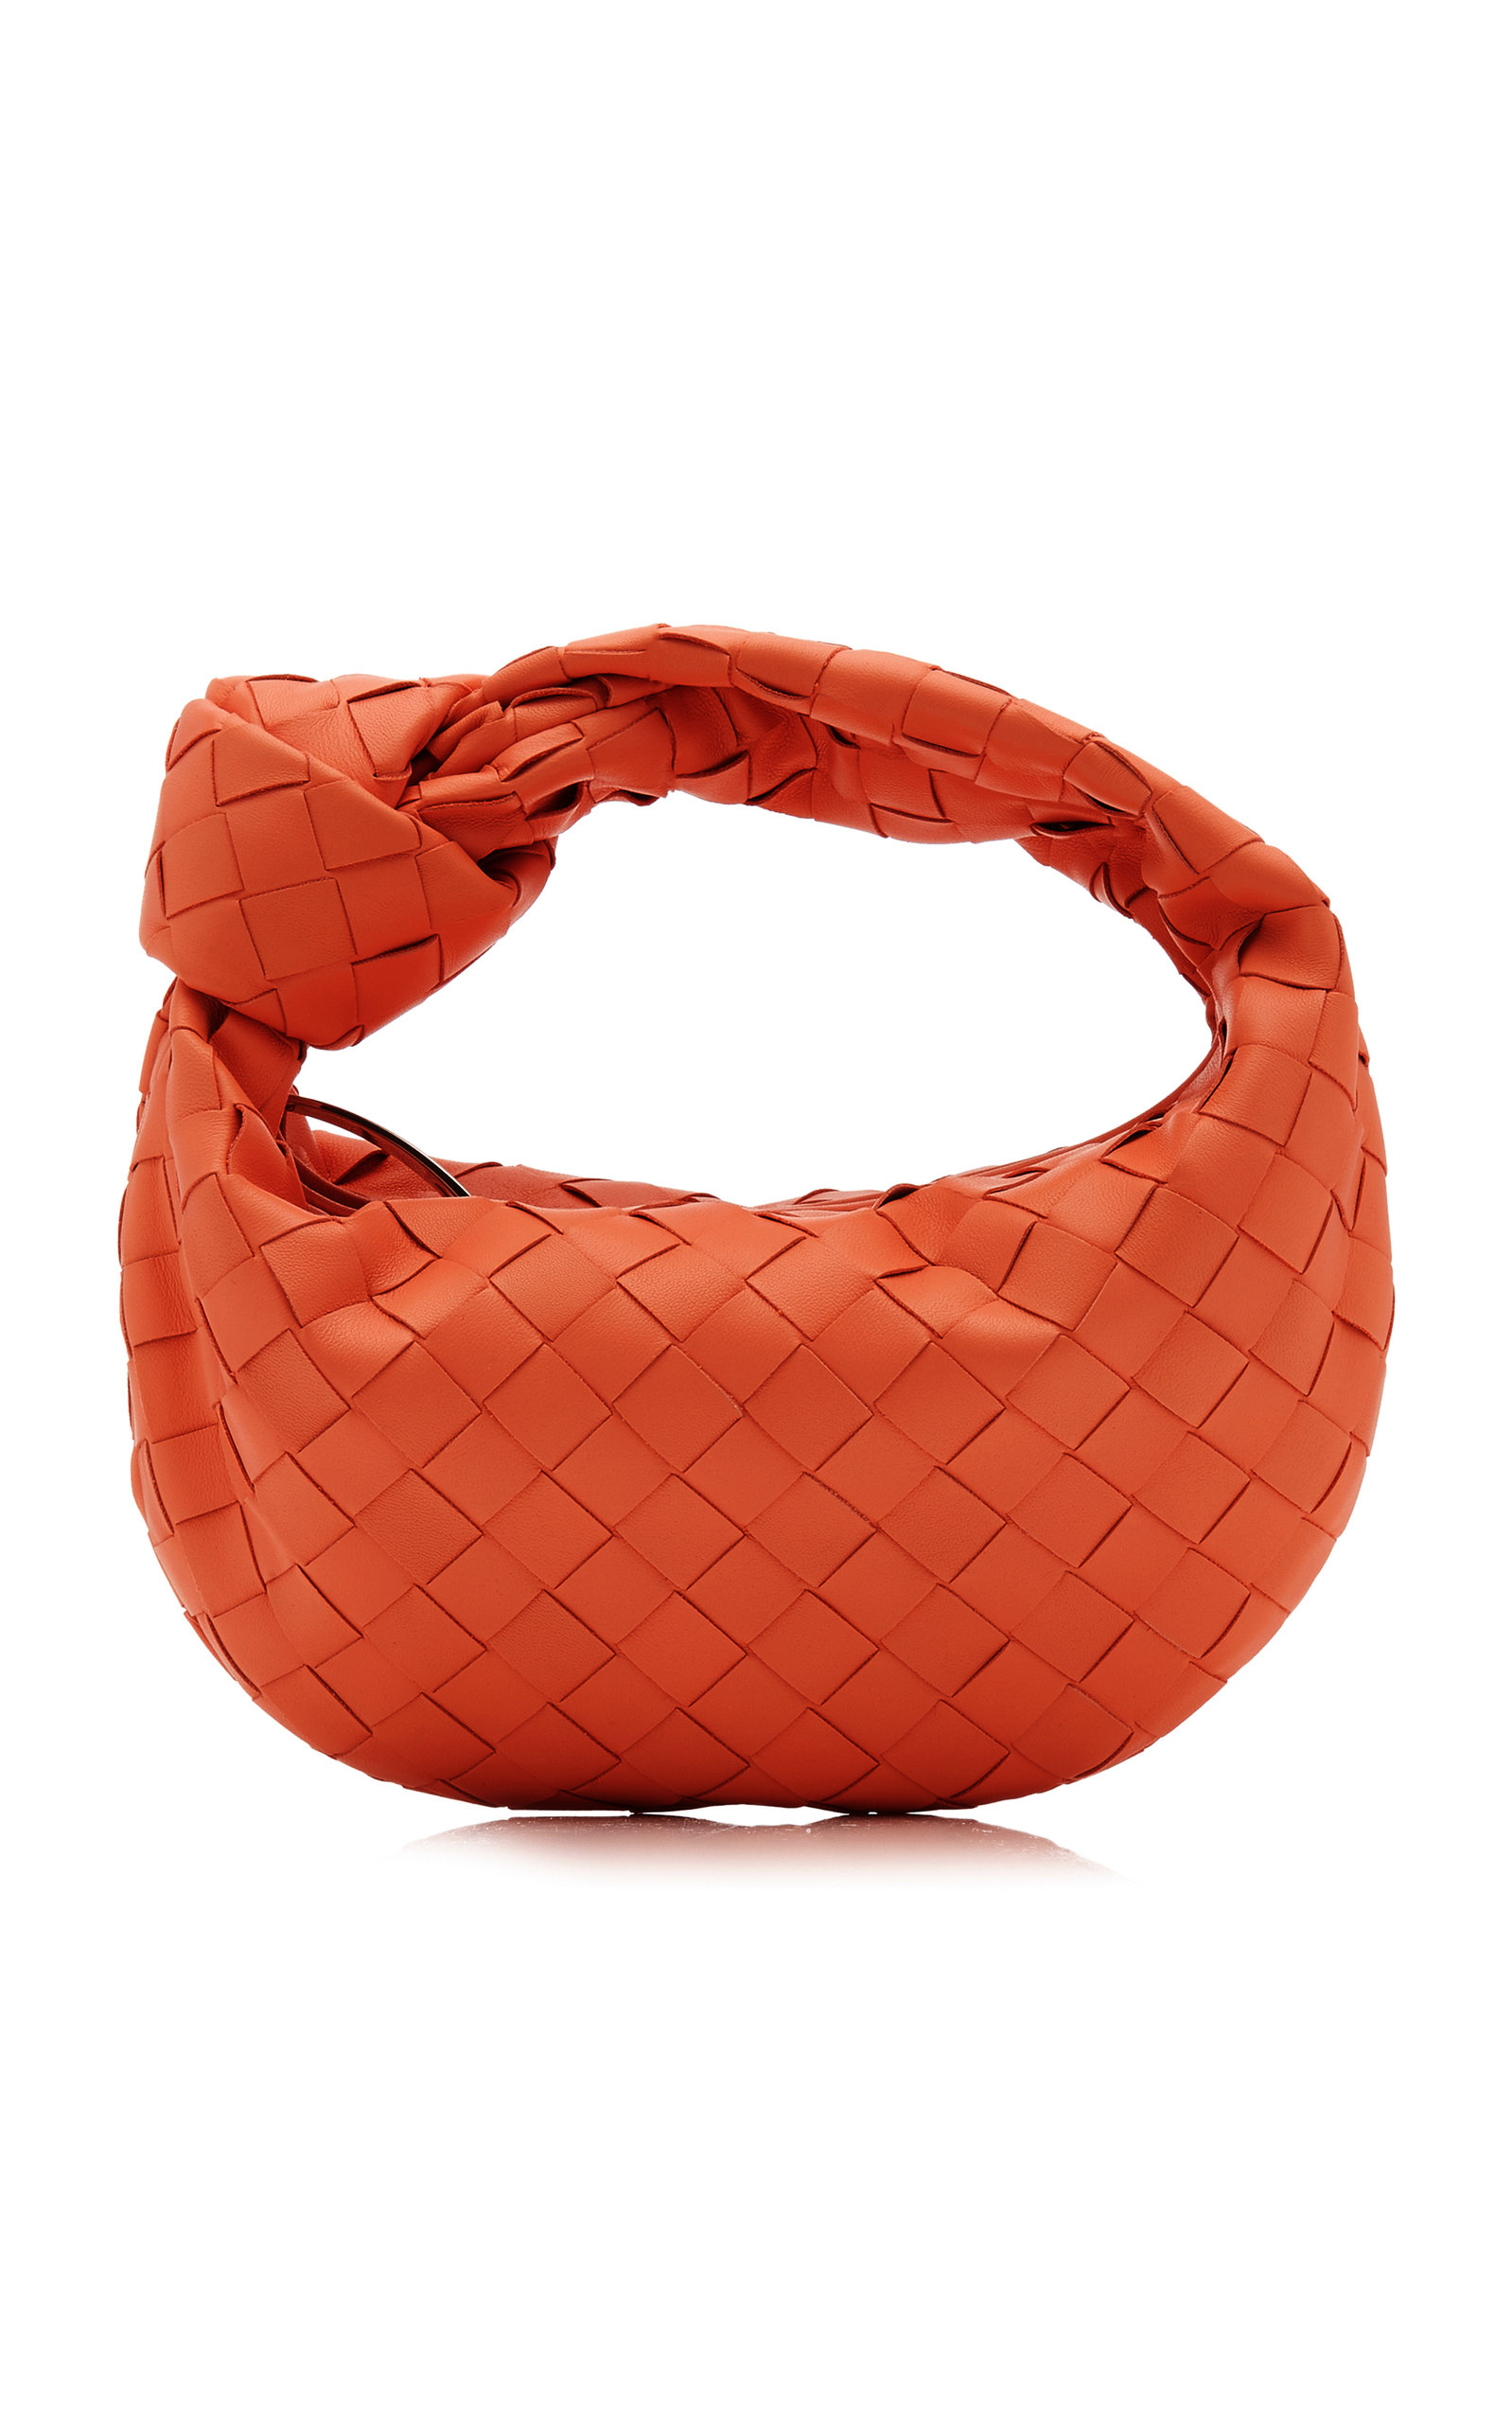 Bottega Veneta - The Mini Jodie Leather Bag - Orange - OS - Moda Operandi